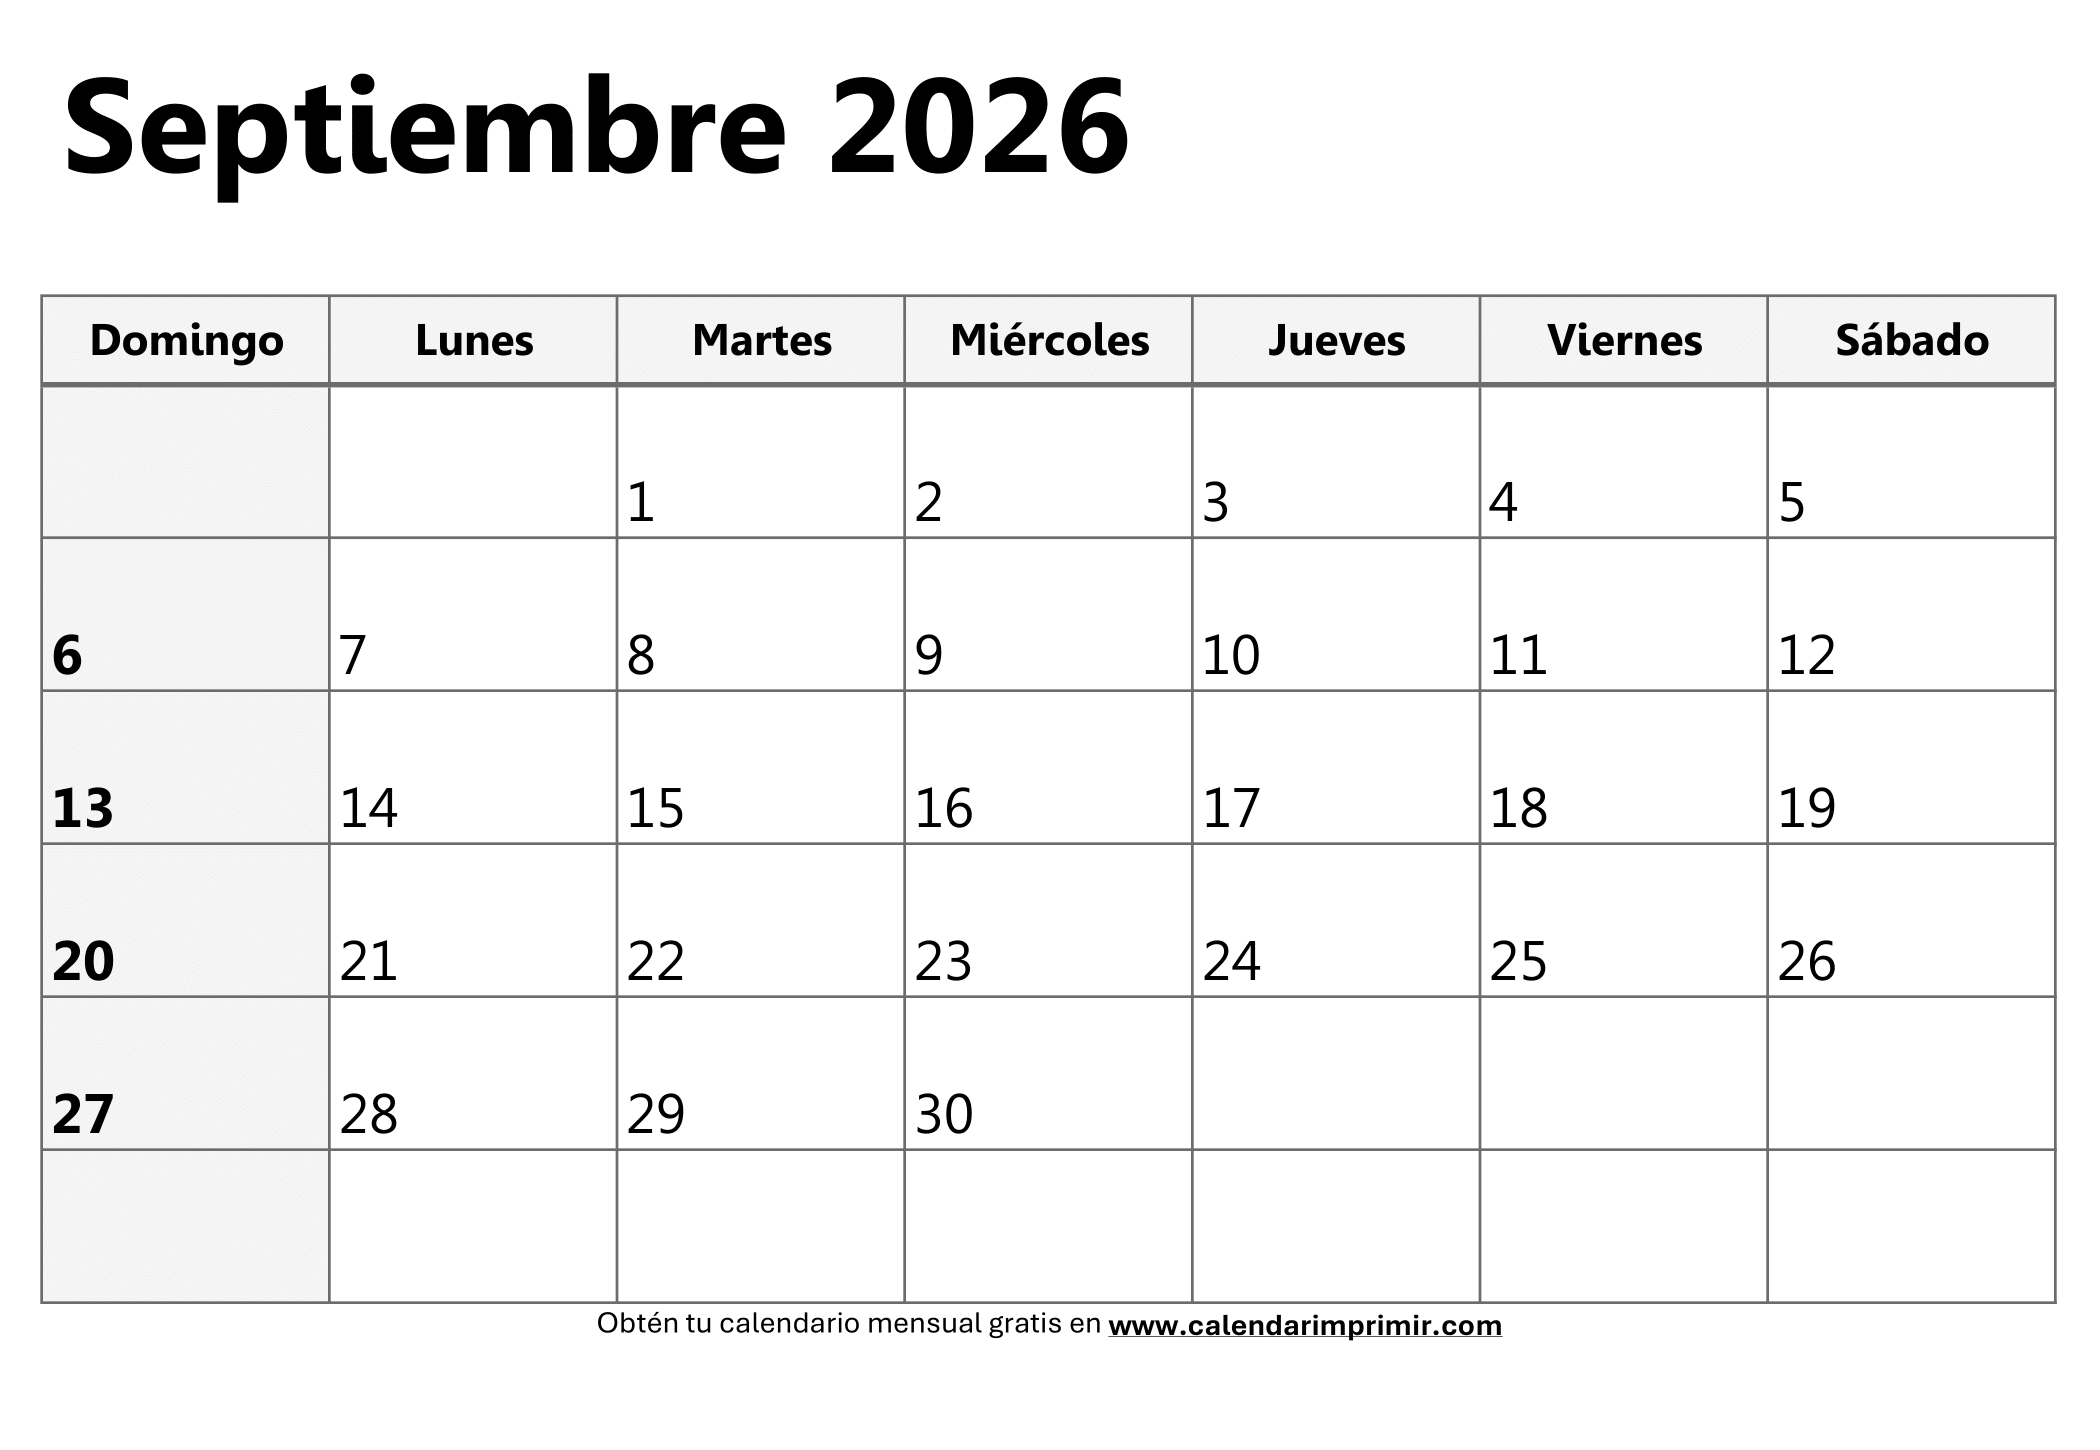 Calendario Septiembre 2026 para imprimir